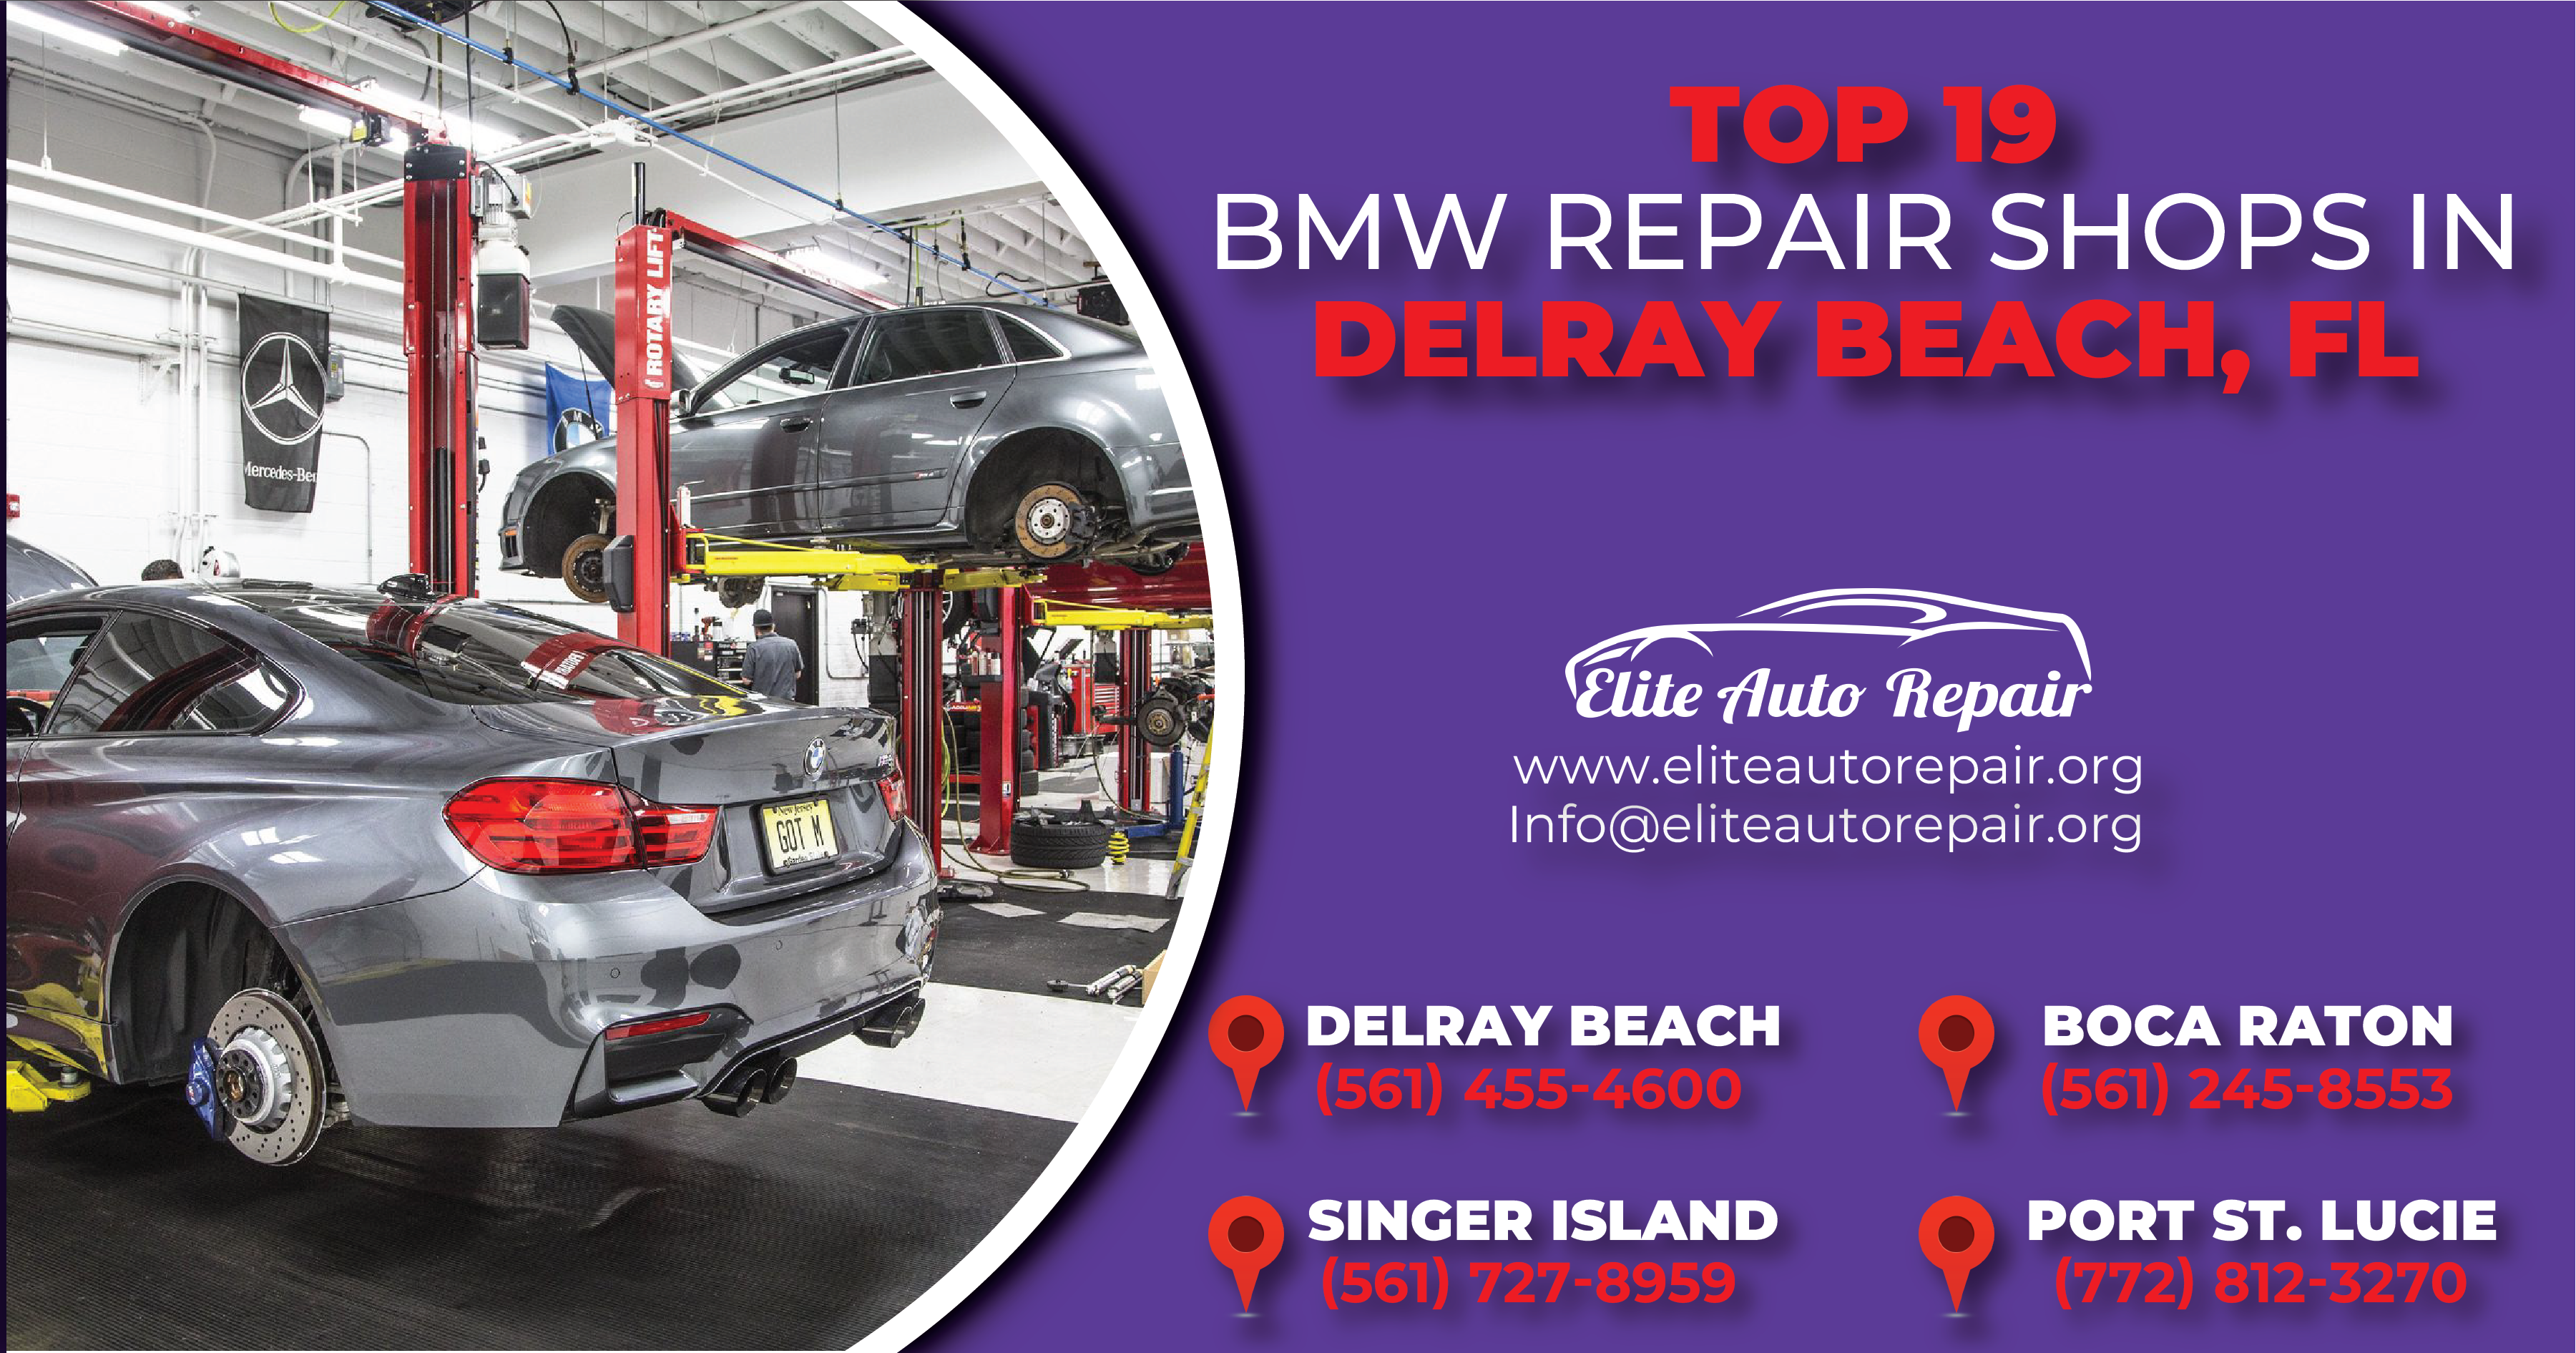 Top 19 BMW Repair Shops in Delray Beach, FL